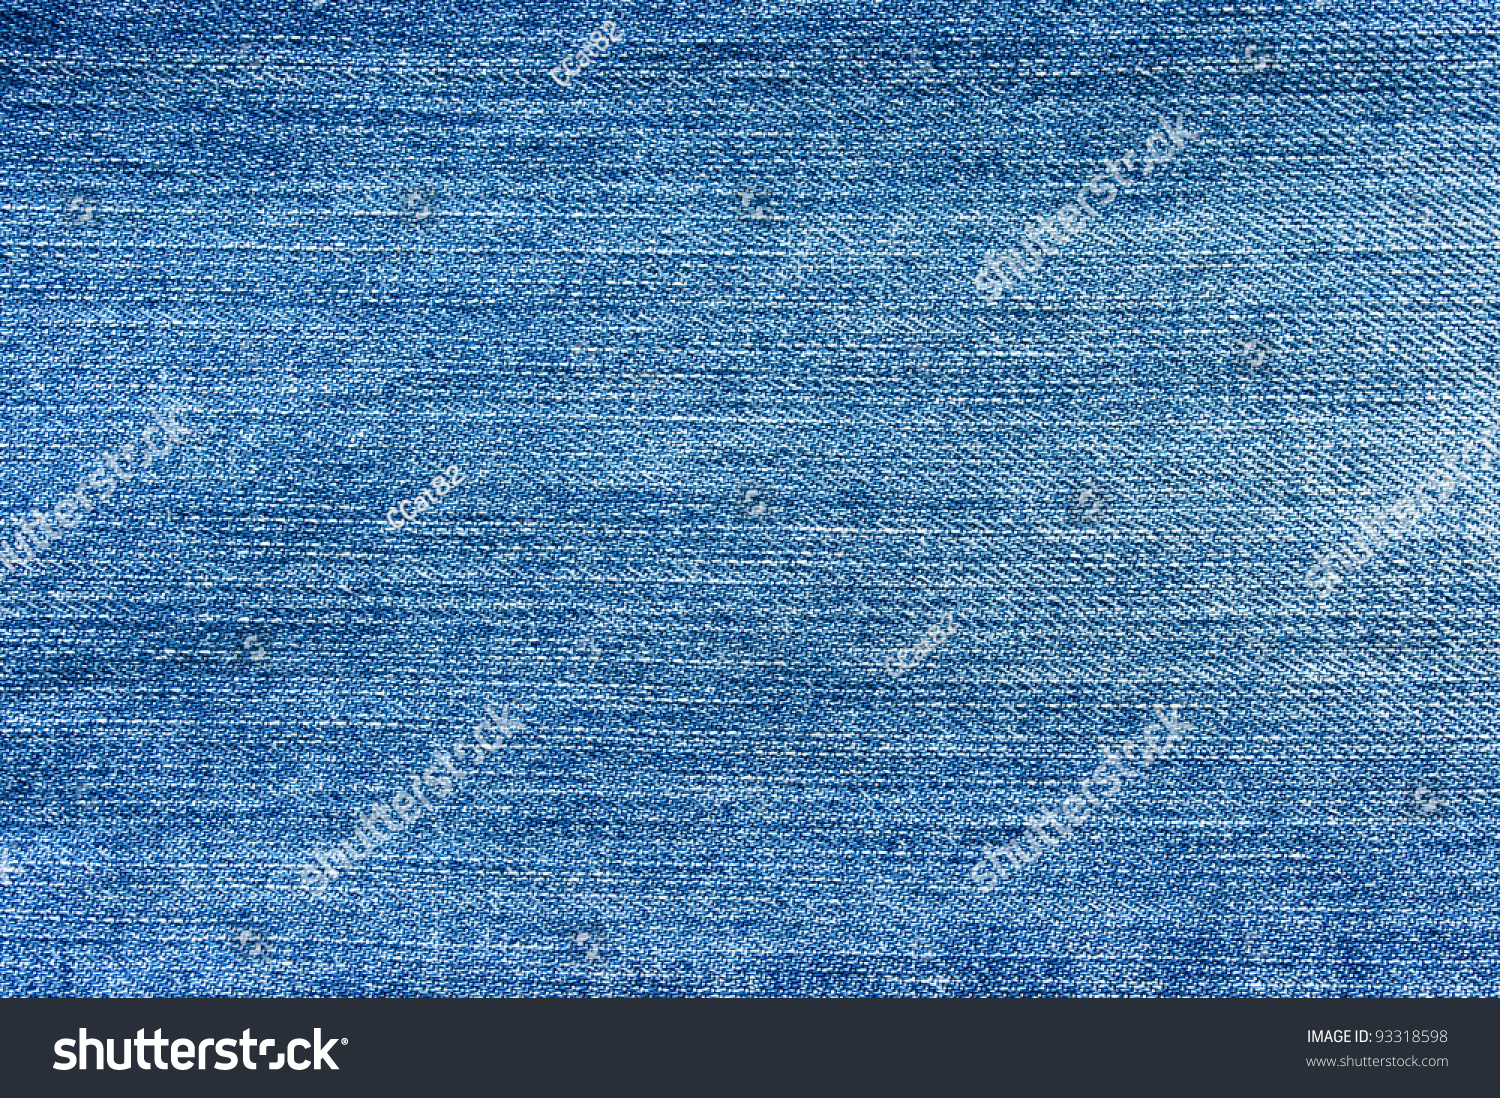 Denim Texture For Background Usage Stock Photo 93318598 : Shutterstock